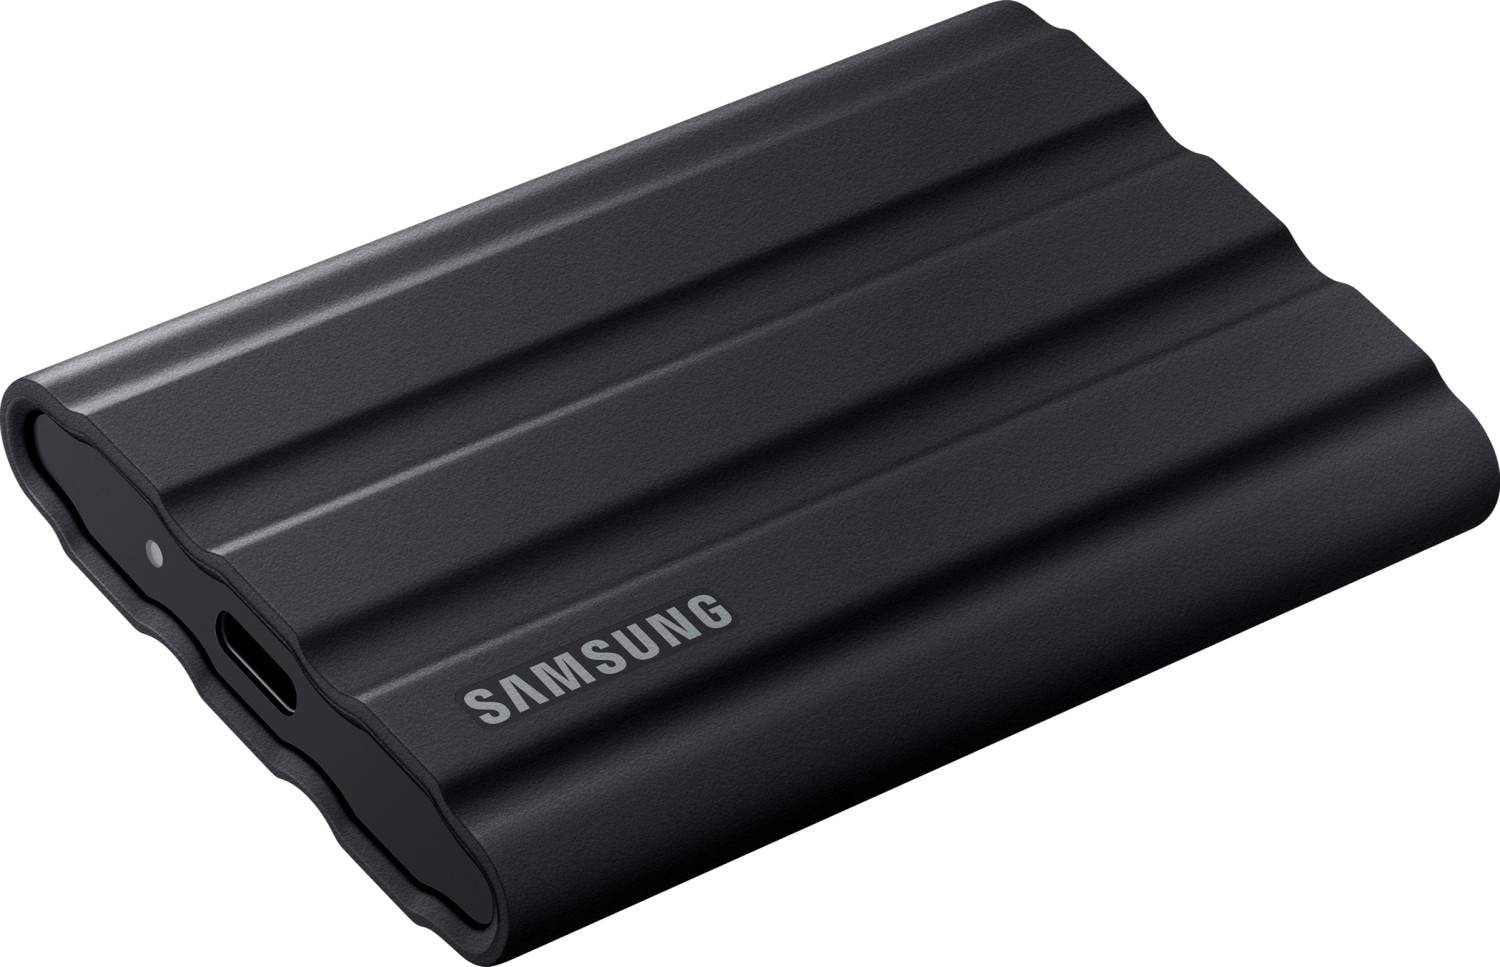 Samsung externe SSD »T7 Shield«, Anschluss USB-C